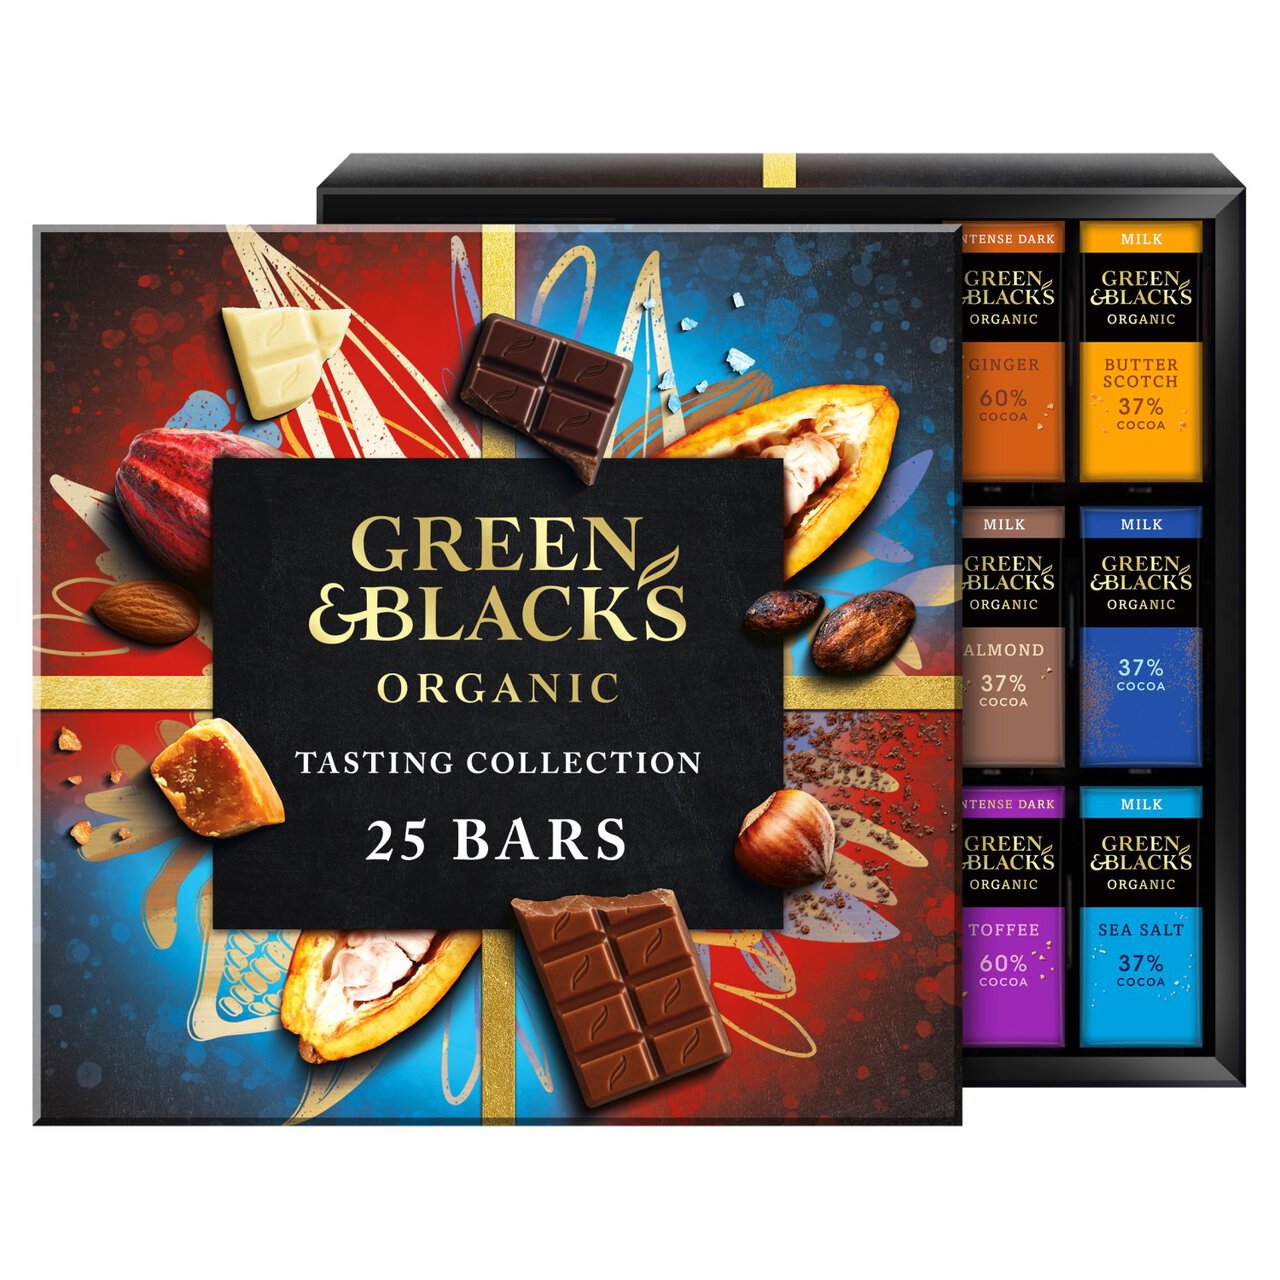 Green & Black's Organic Tasting Chocolate Collection 395g